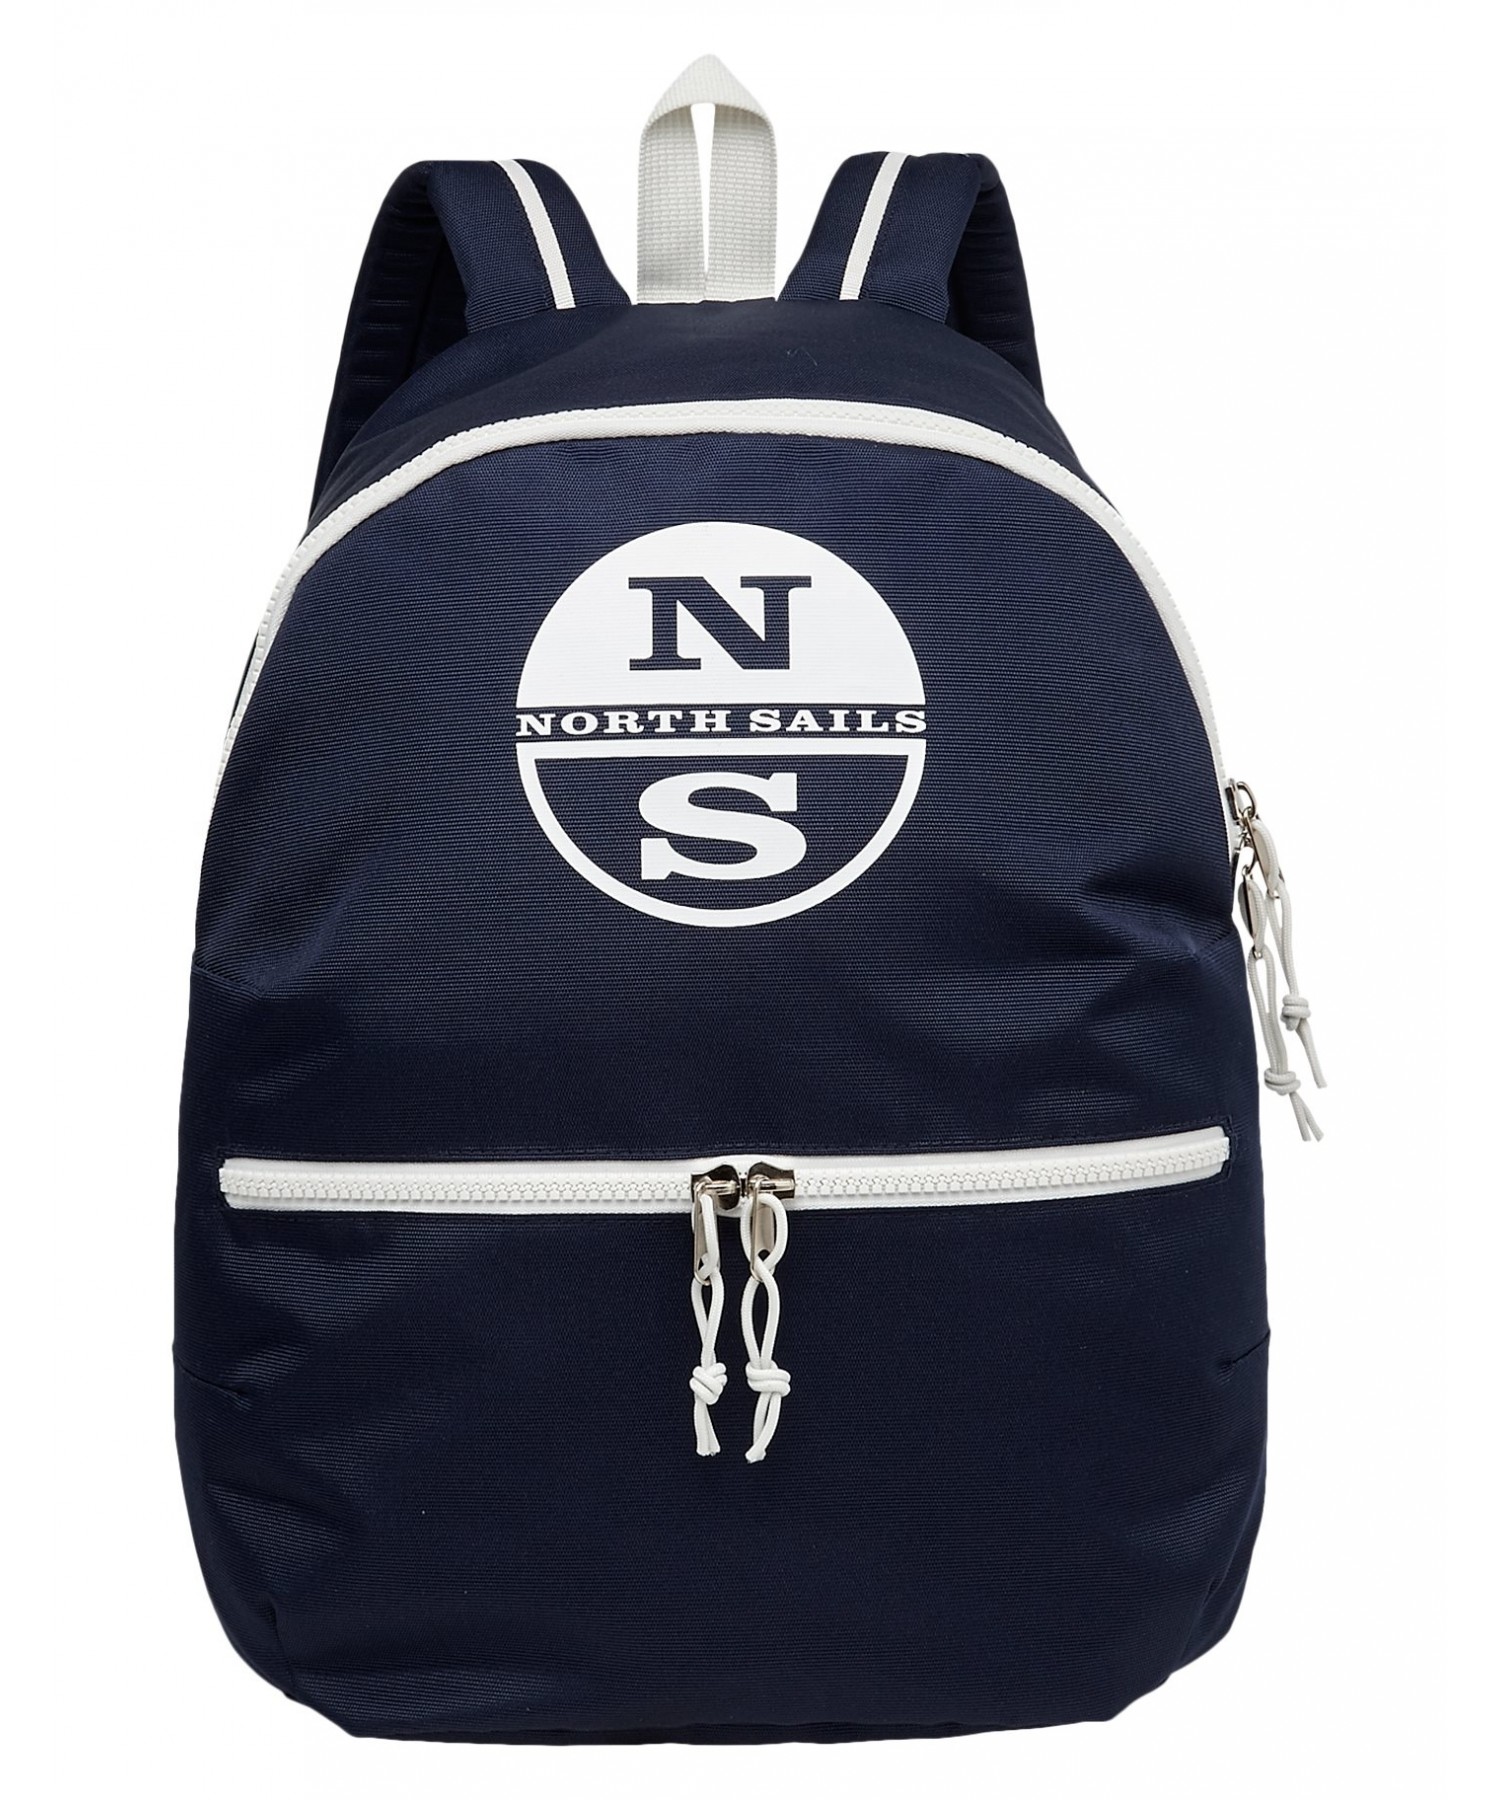 north sails backpack